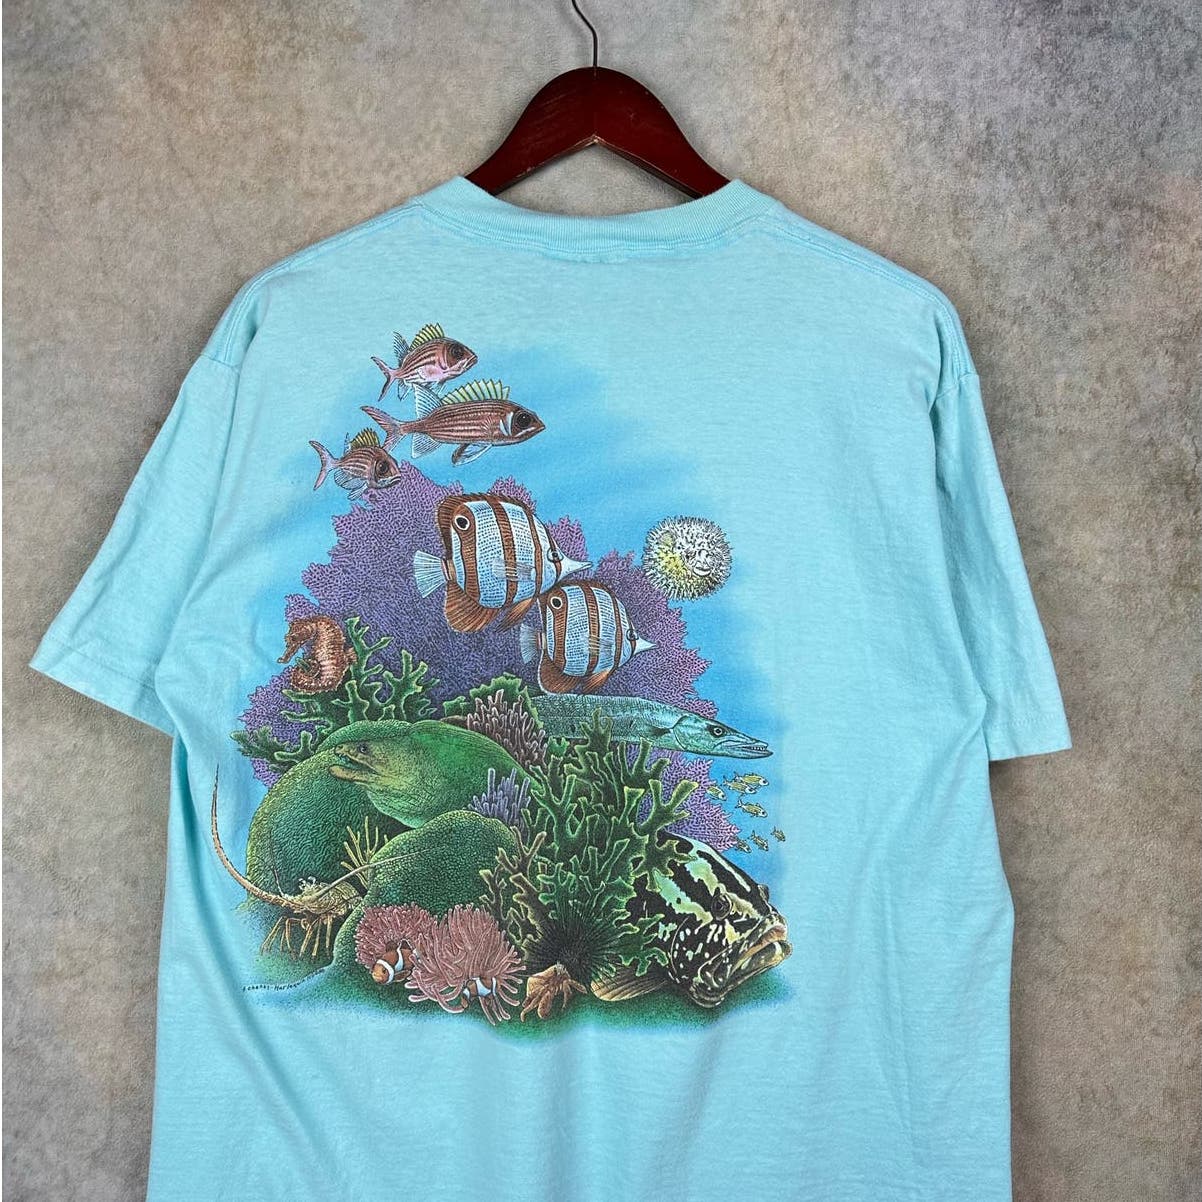 Vintage Fish T Shirt XL